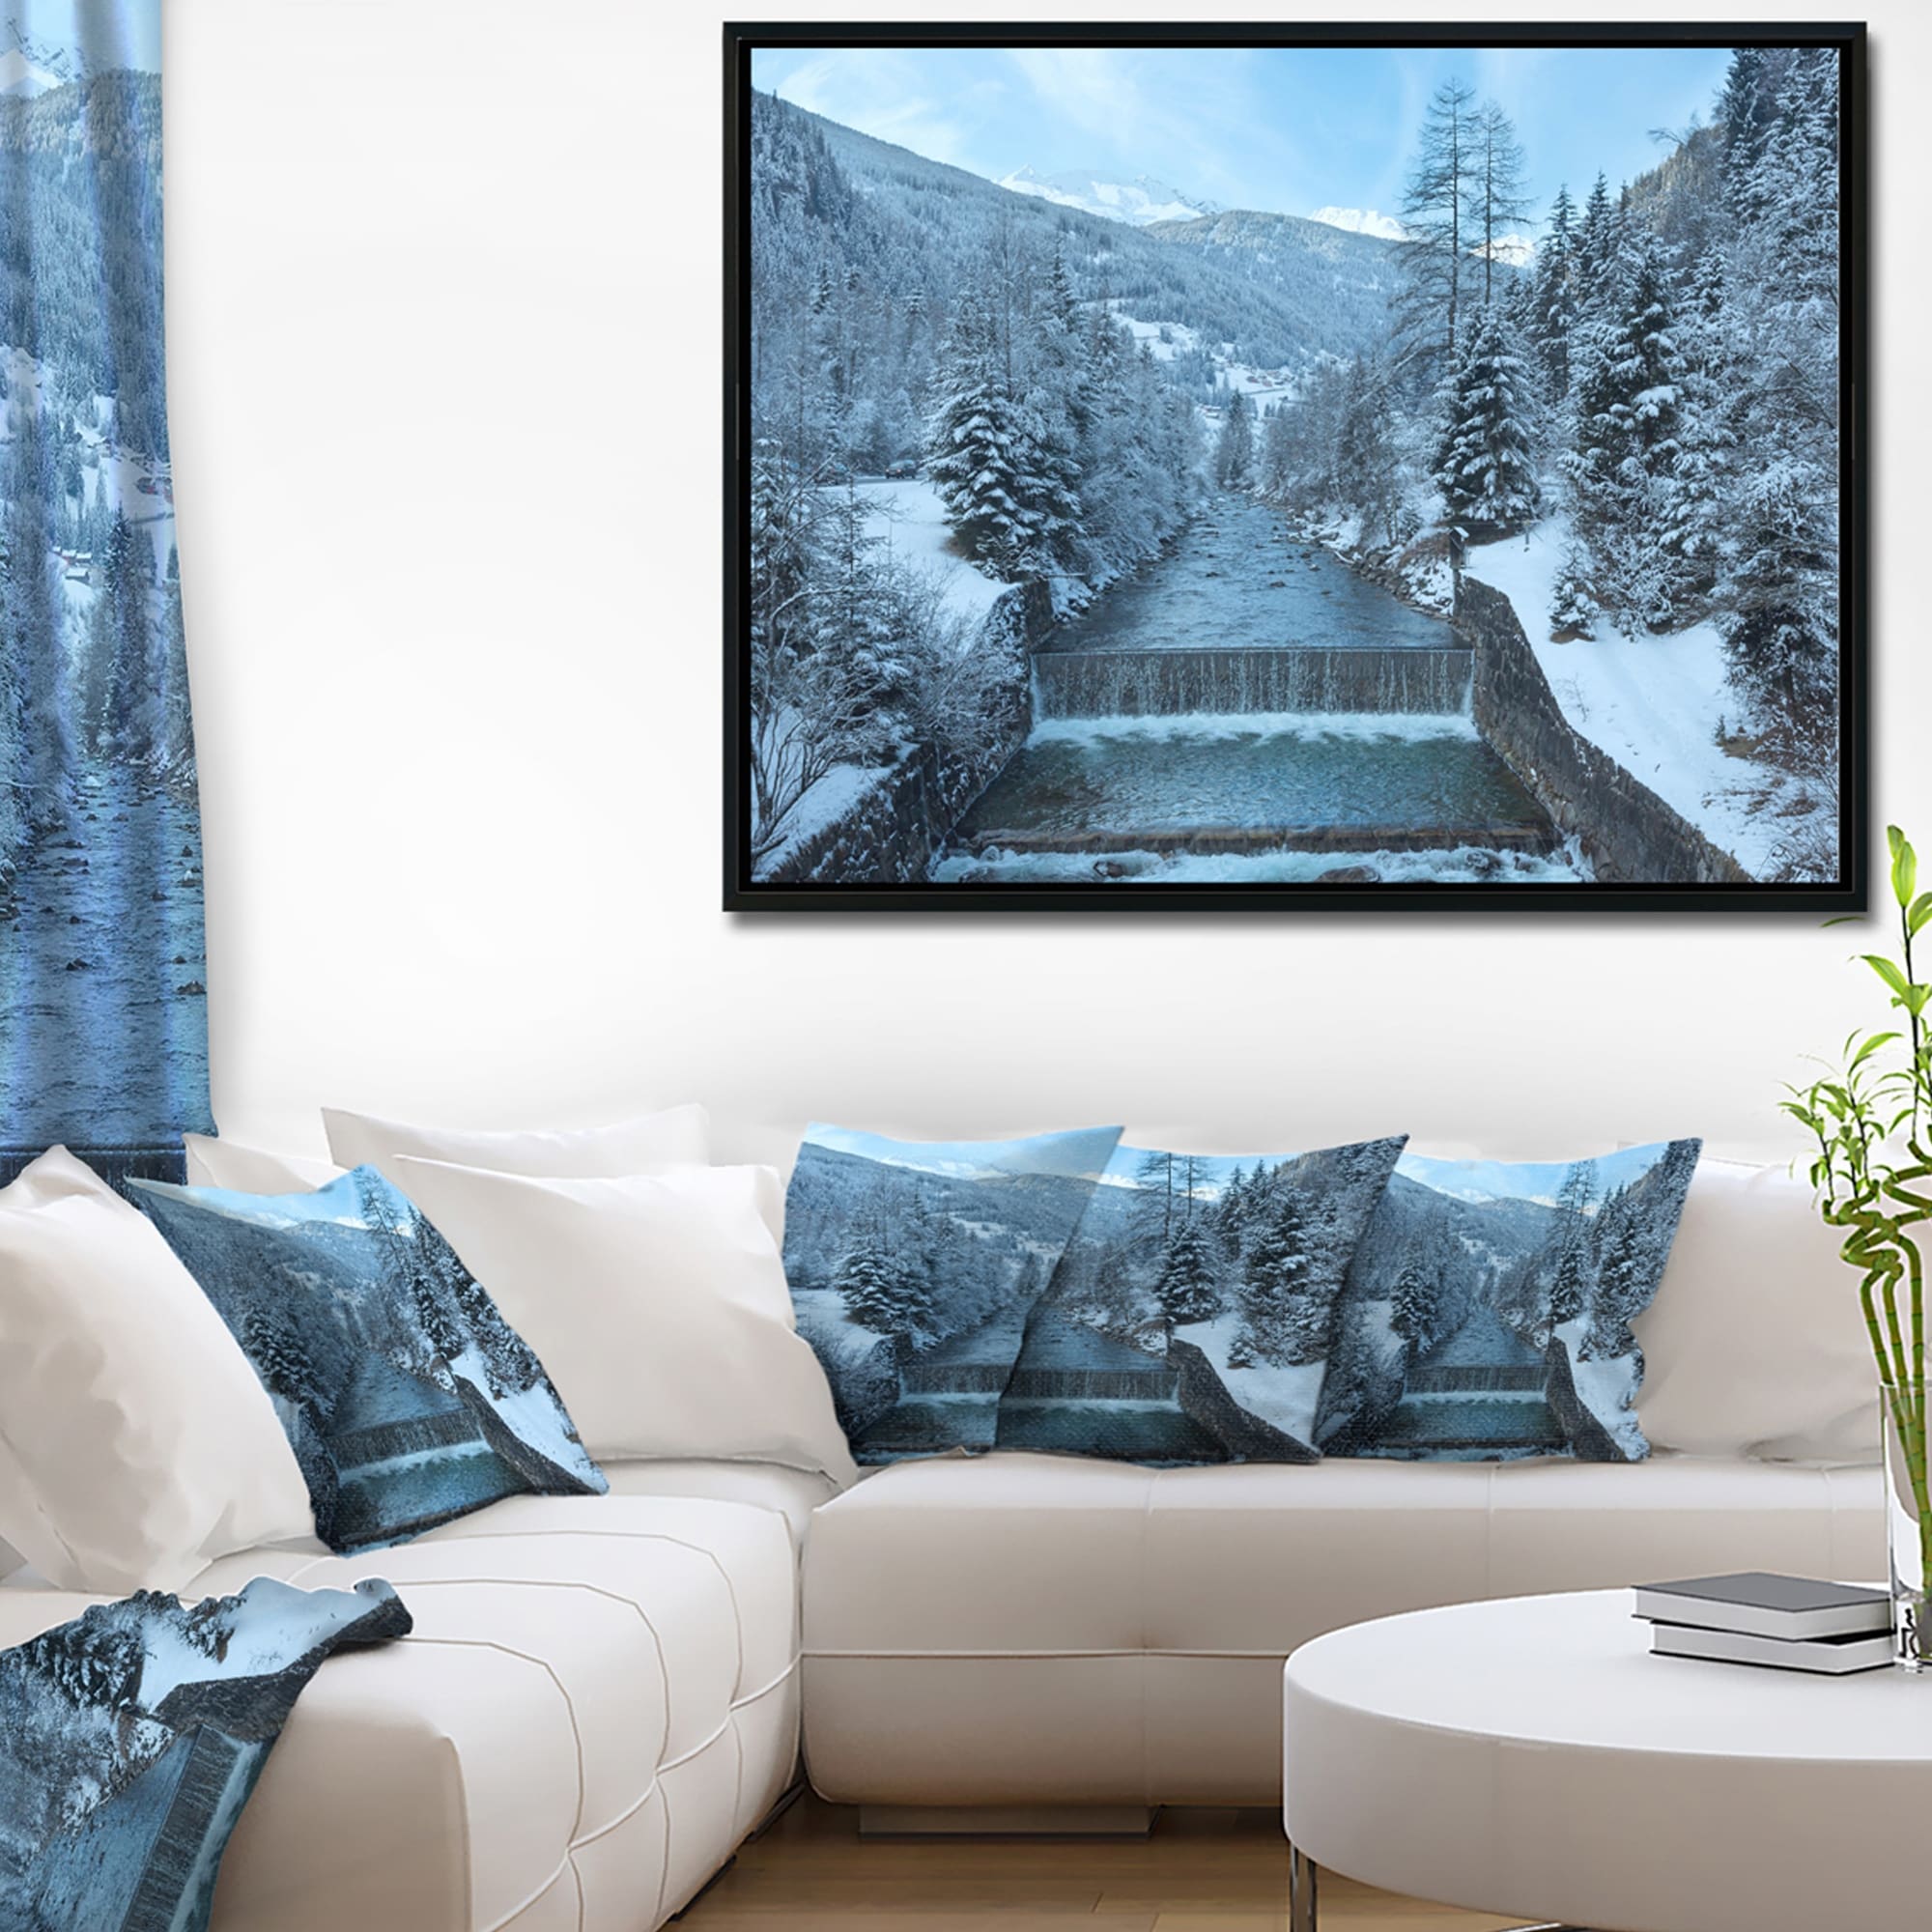 Designart 'Winter Mountain Stream' Landscape Photography Framed Canvas Print